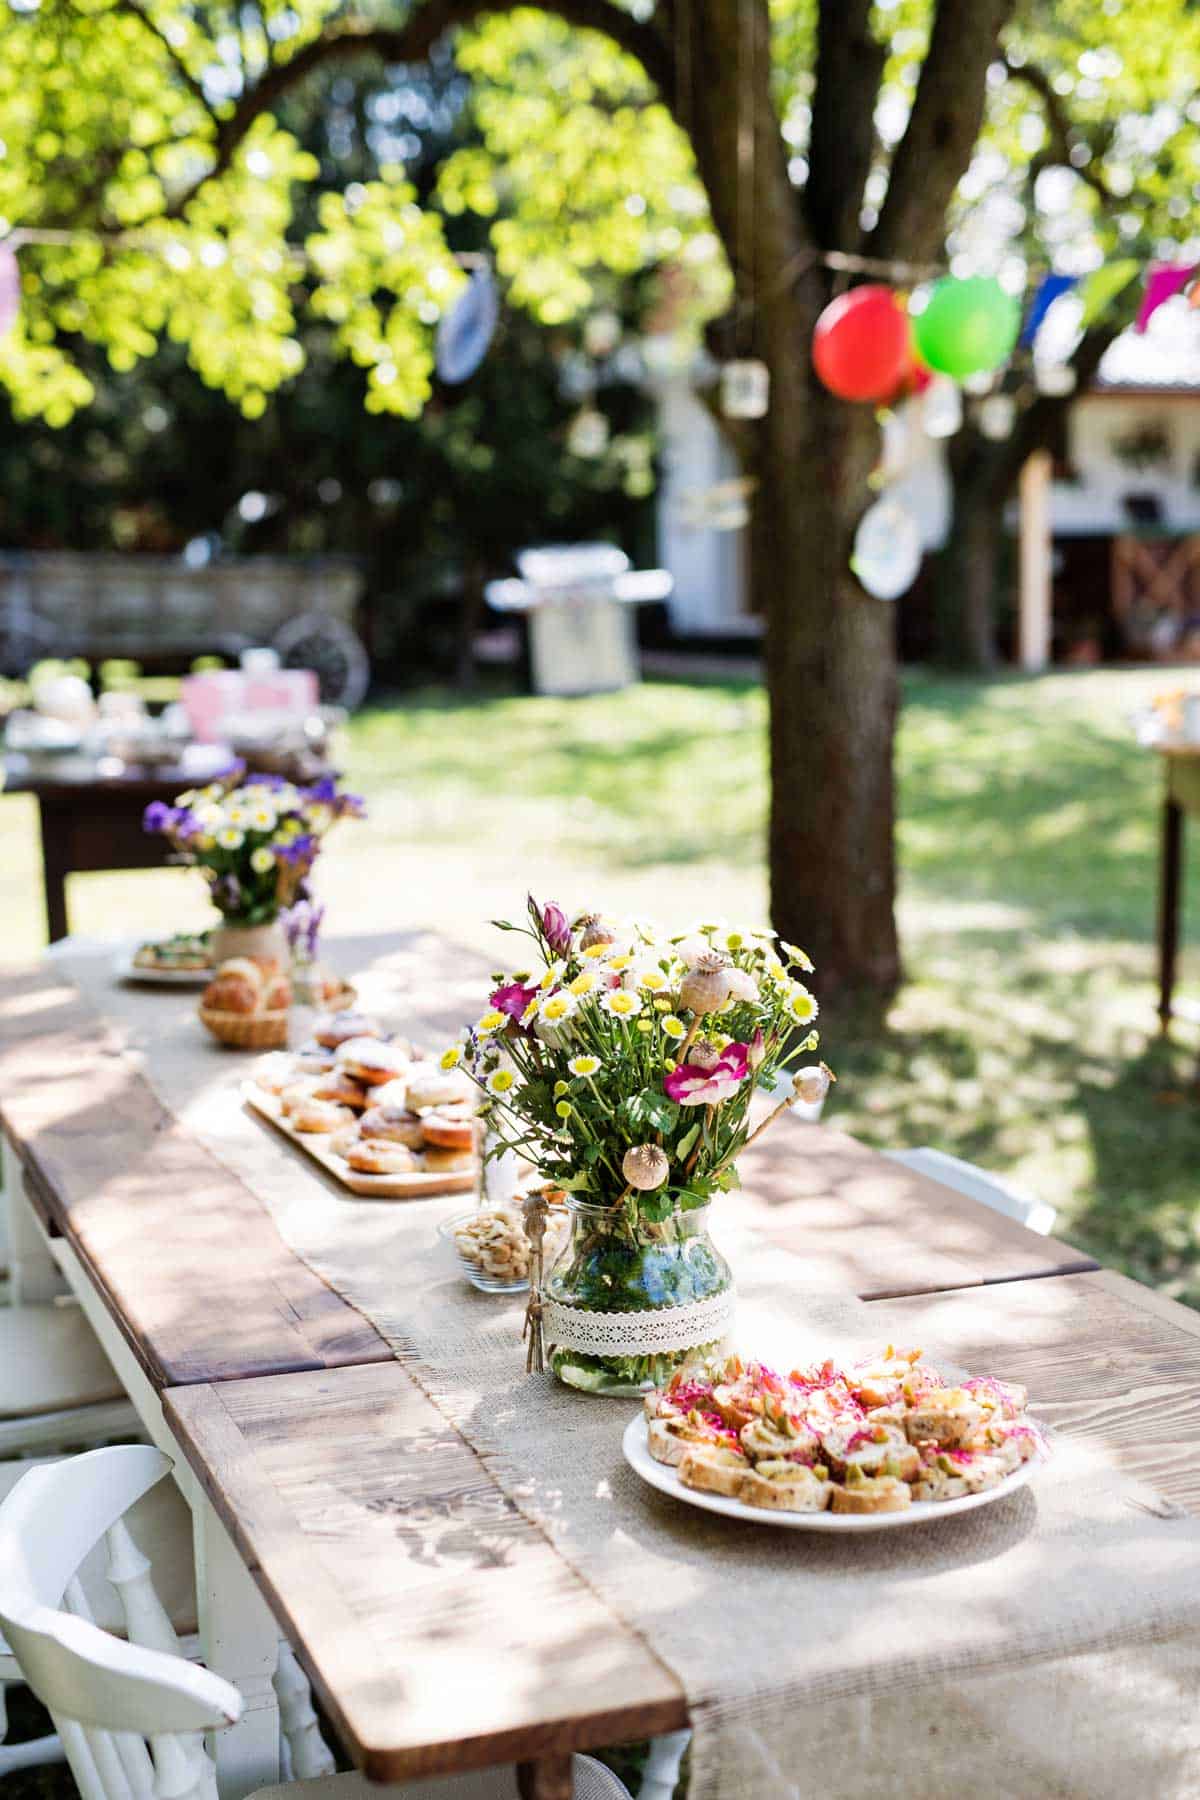 Table set for a garden picnic party celebration.